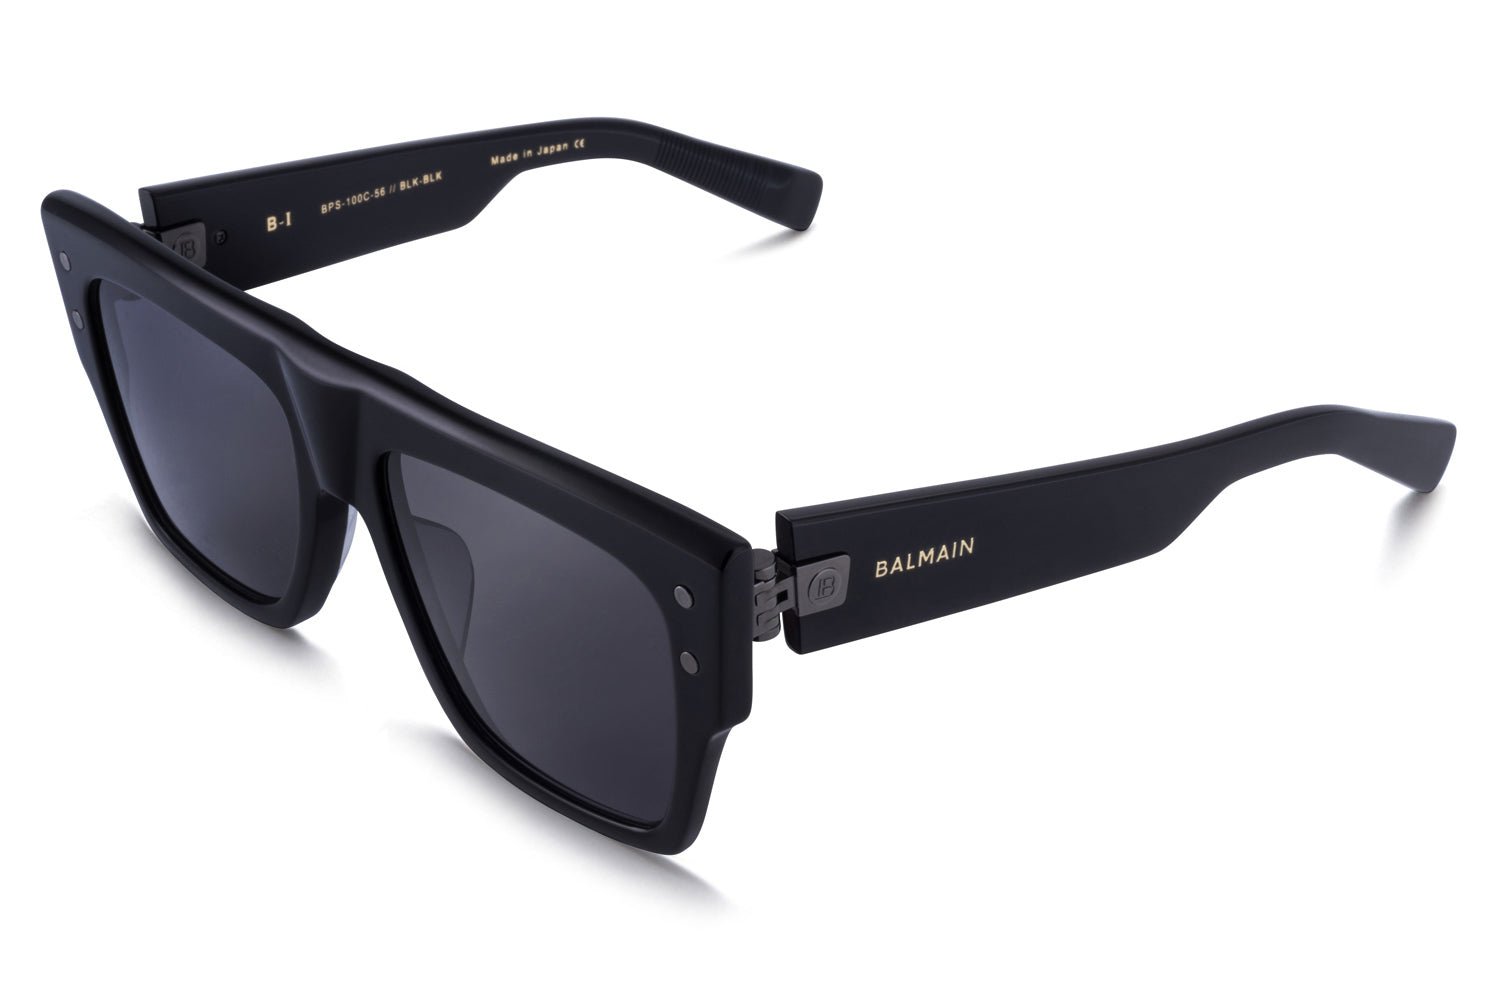 Balmain® Eyewear B-I Sunglasses | Specs Collective